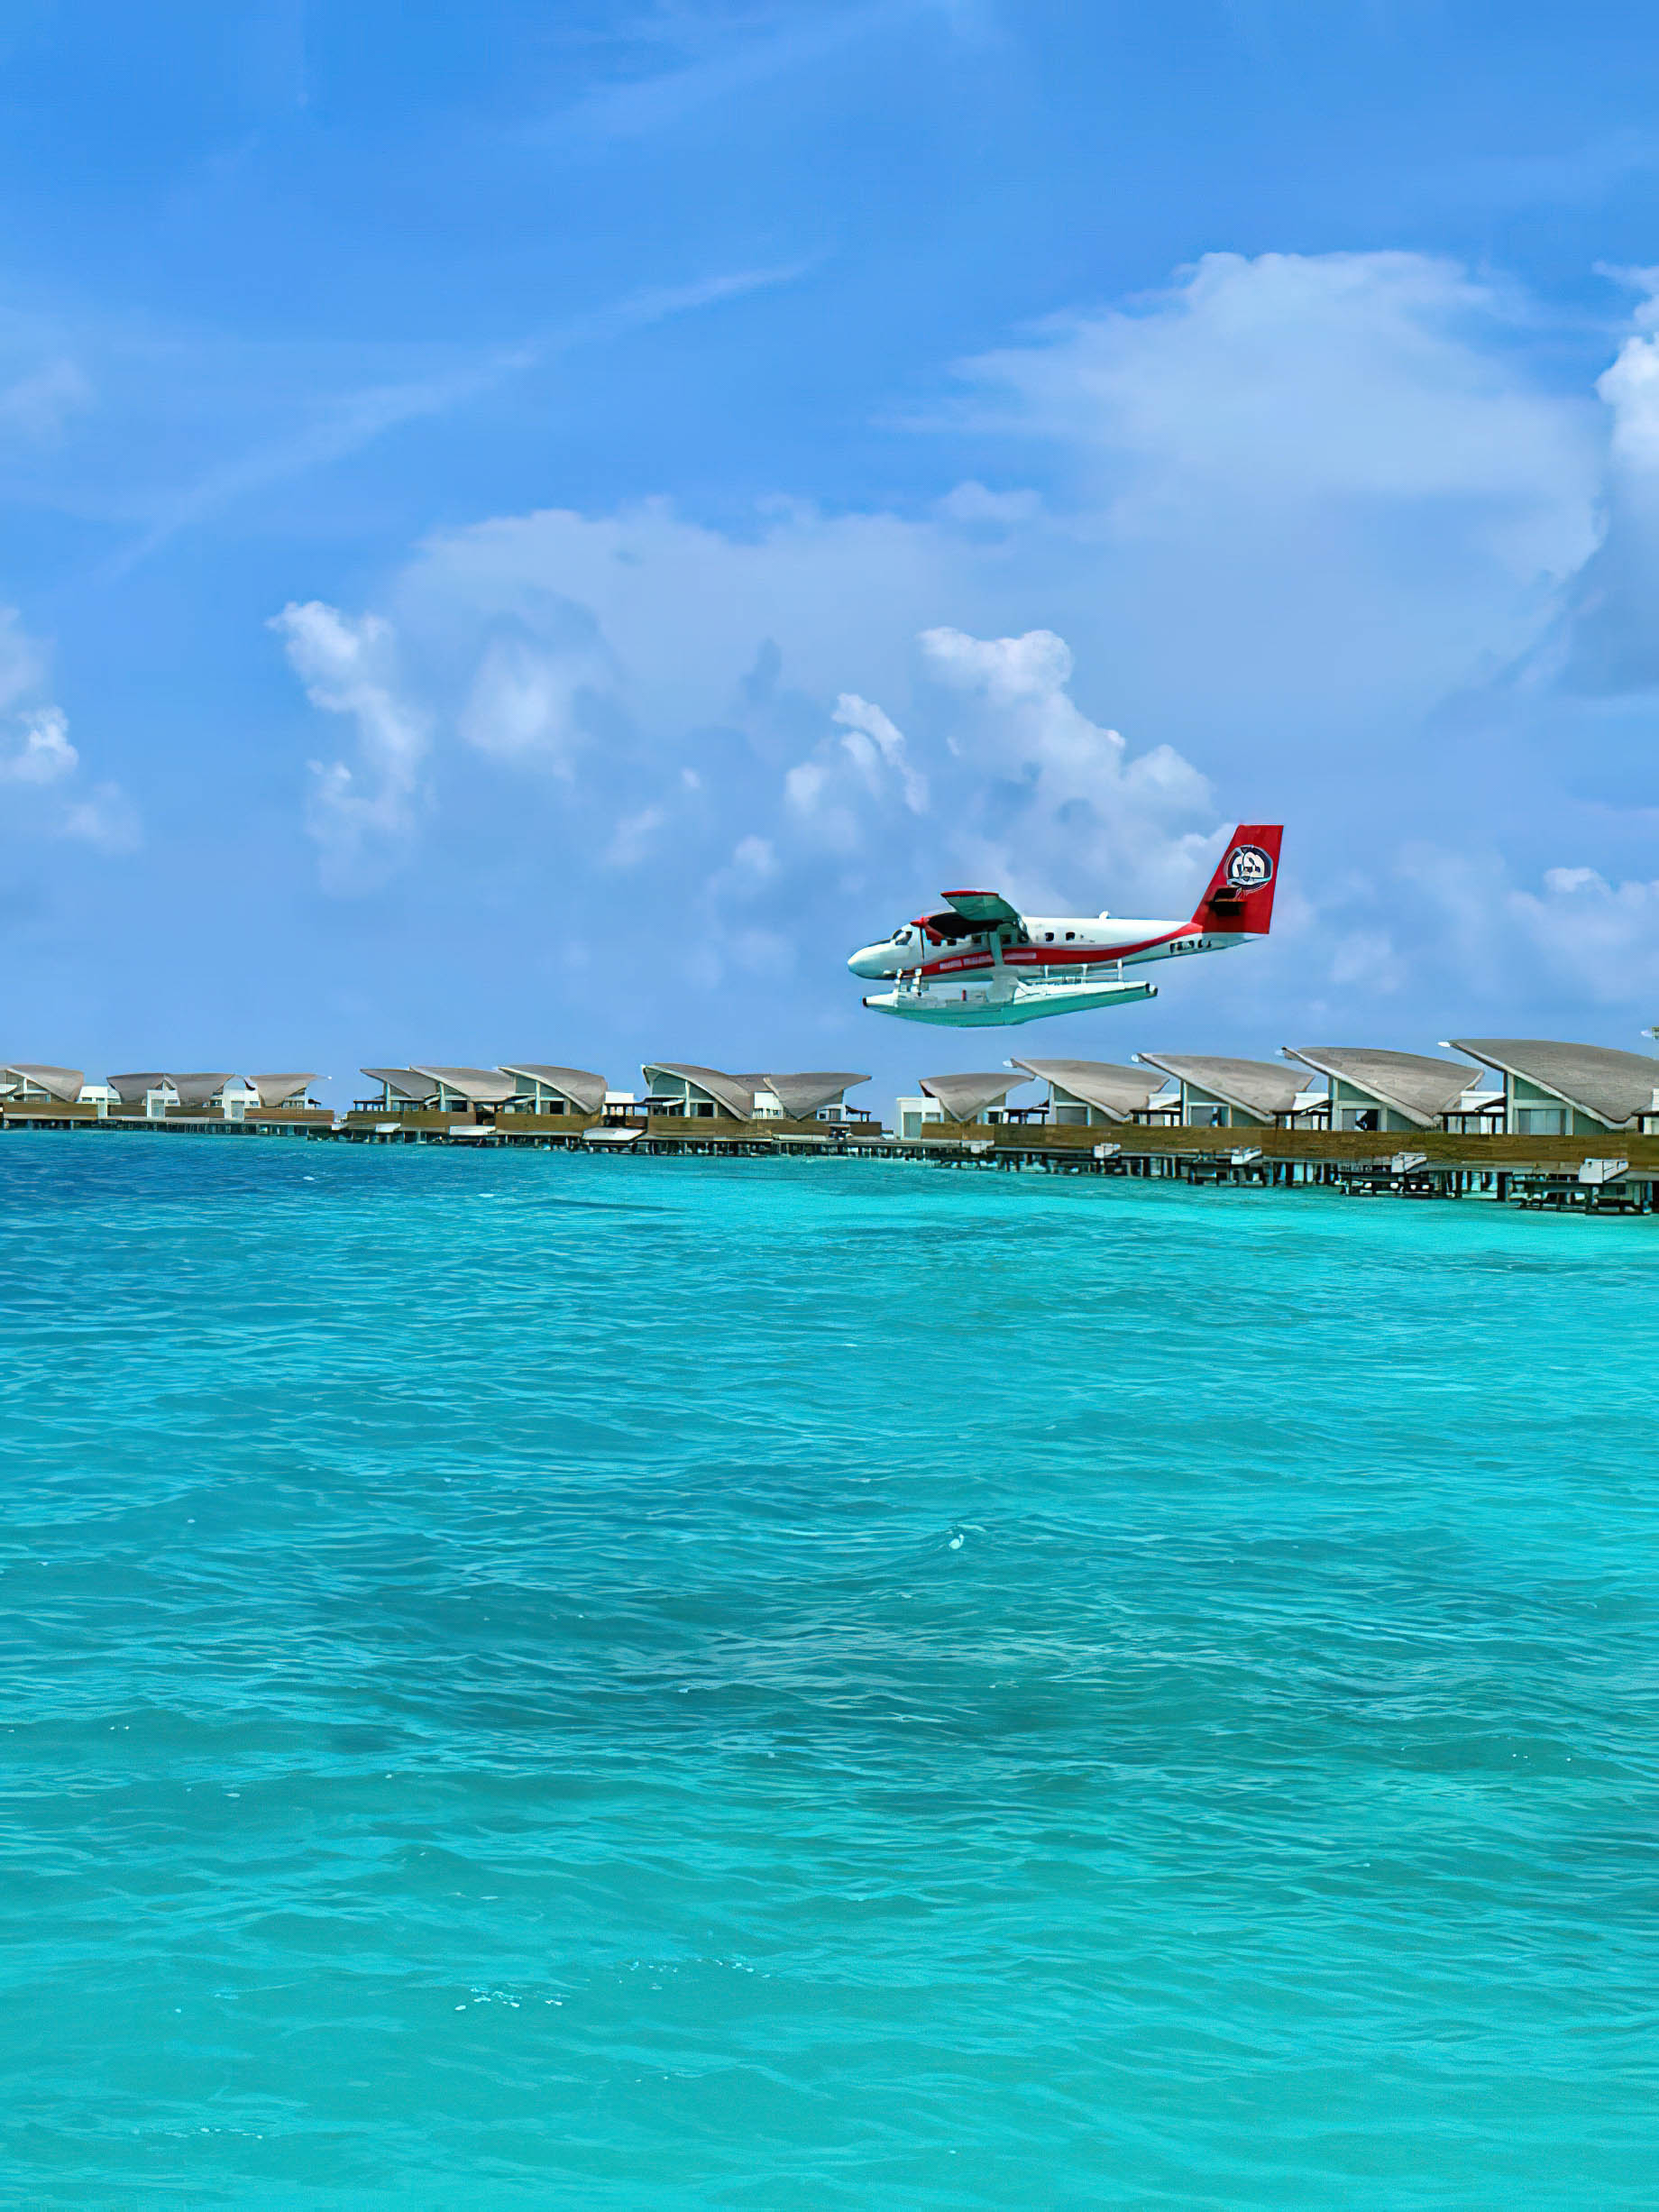 JW Marriott Maldives Resort & Spa – Shaviyani Atoll, Maldives – Arrival by Plane